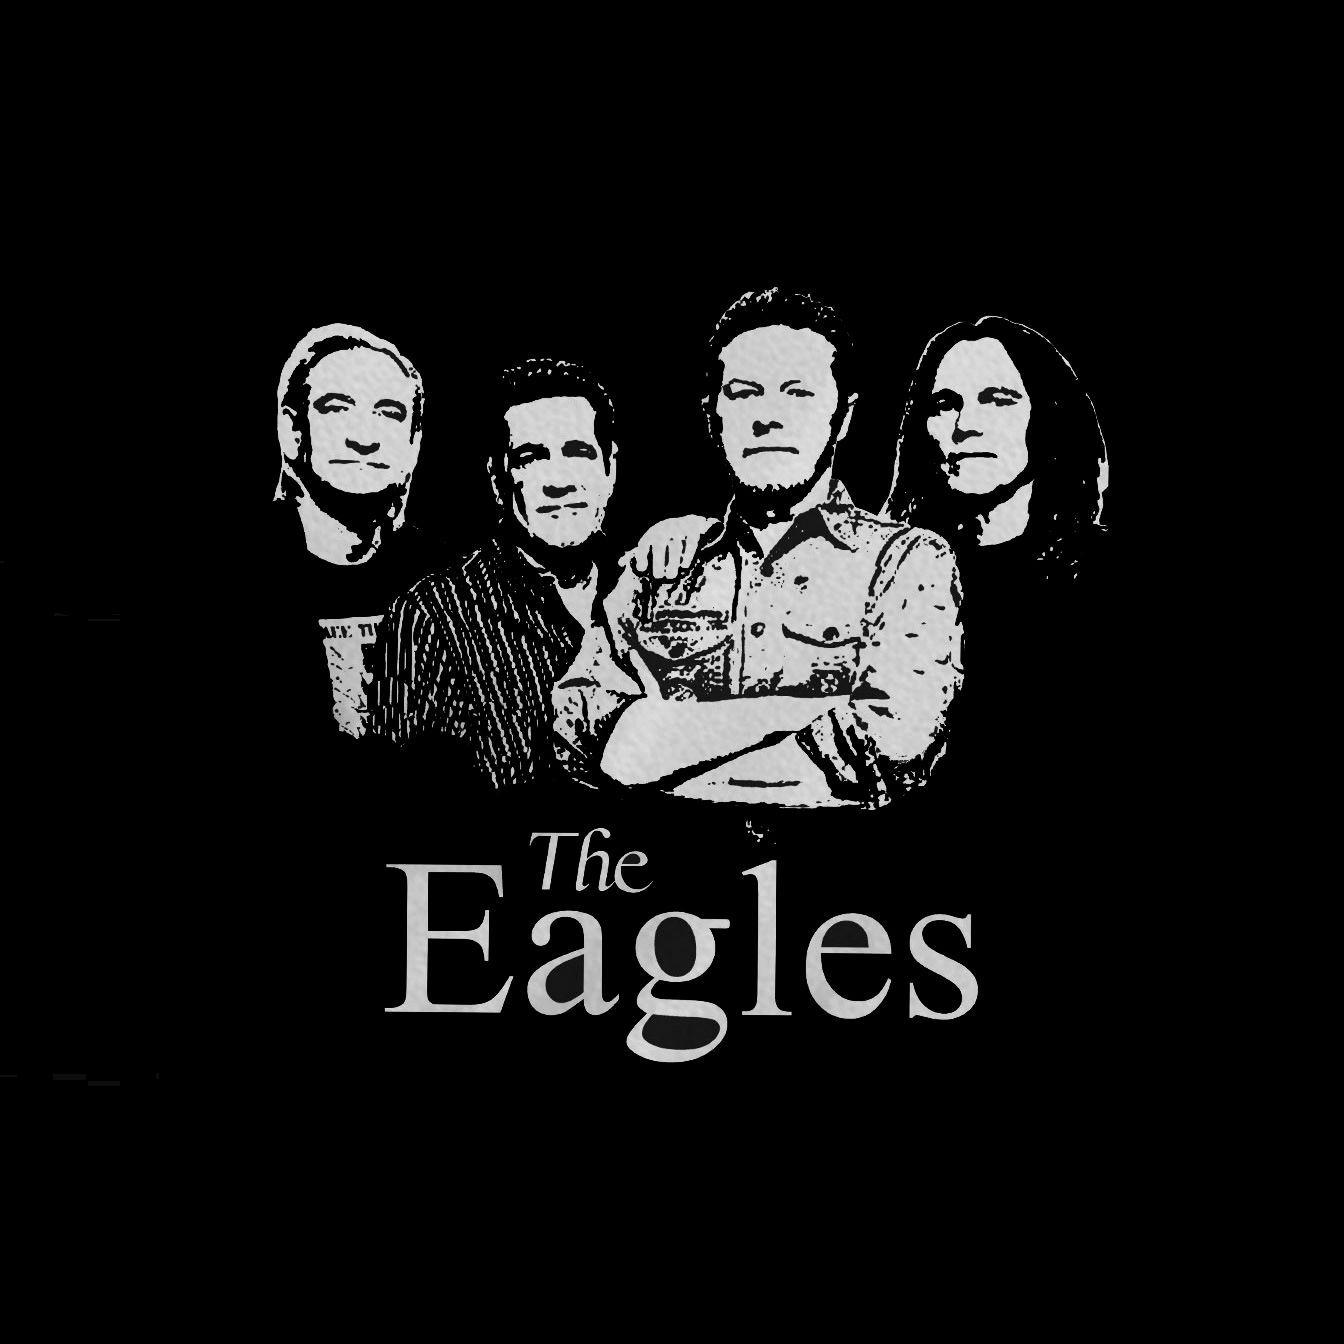 The Eagles Band Logo - The eagles band Logos